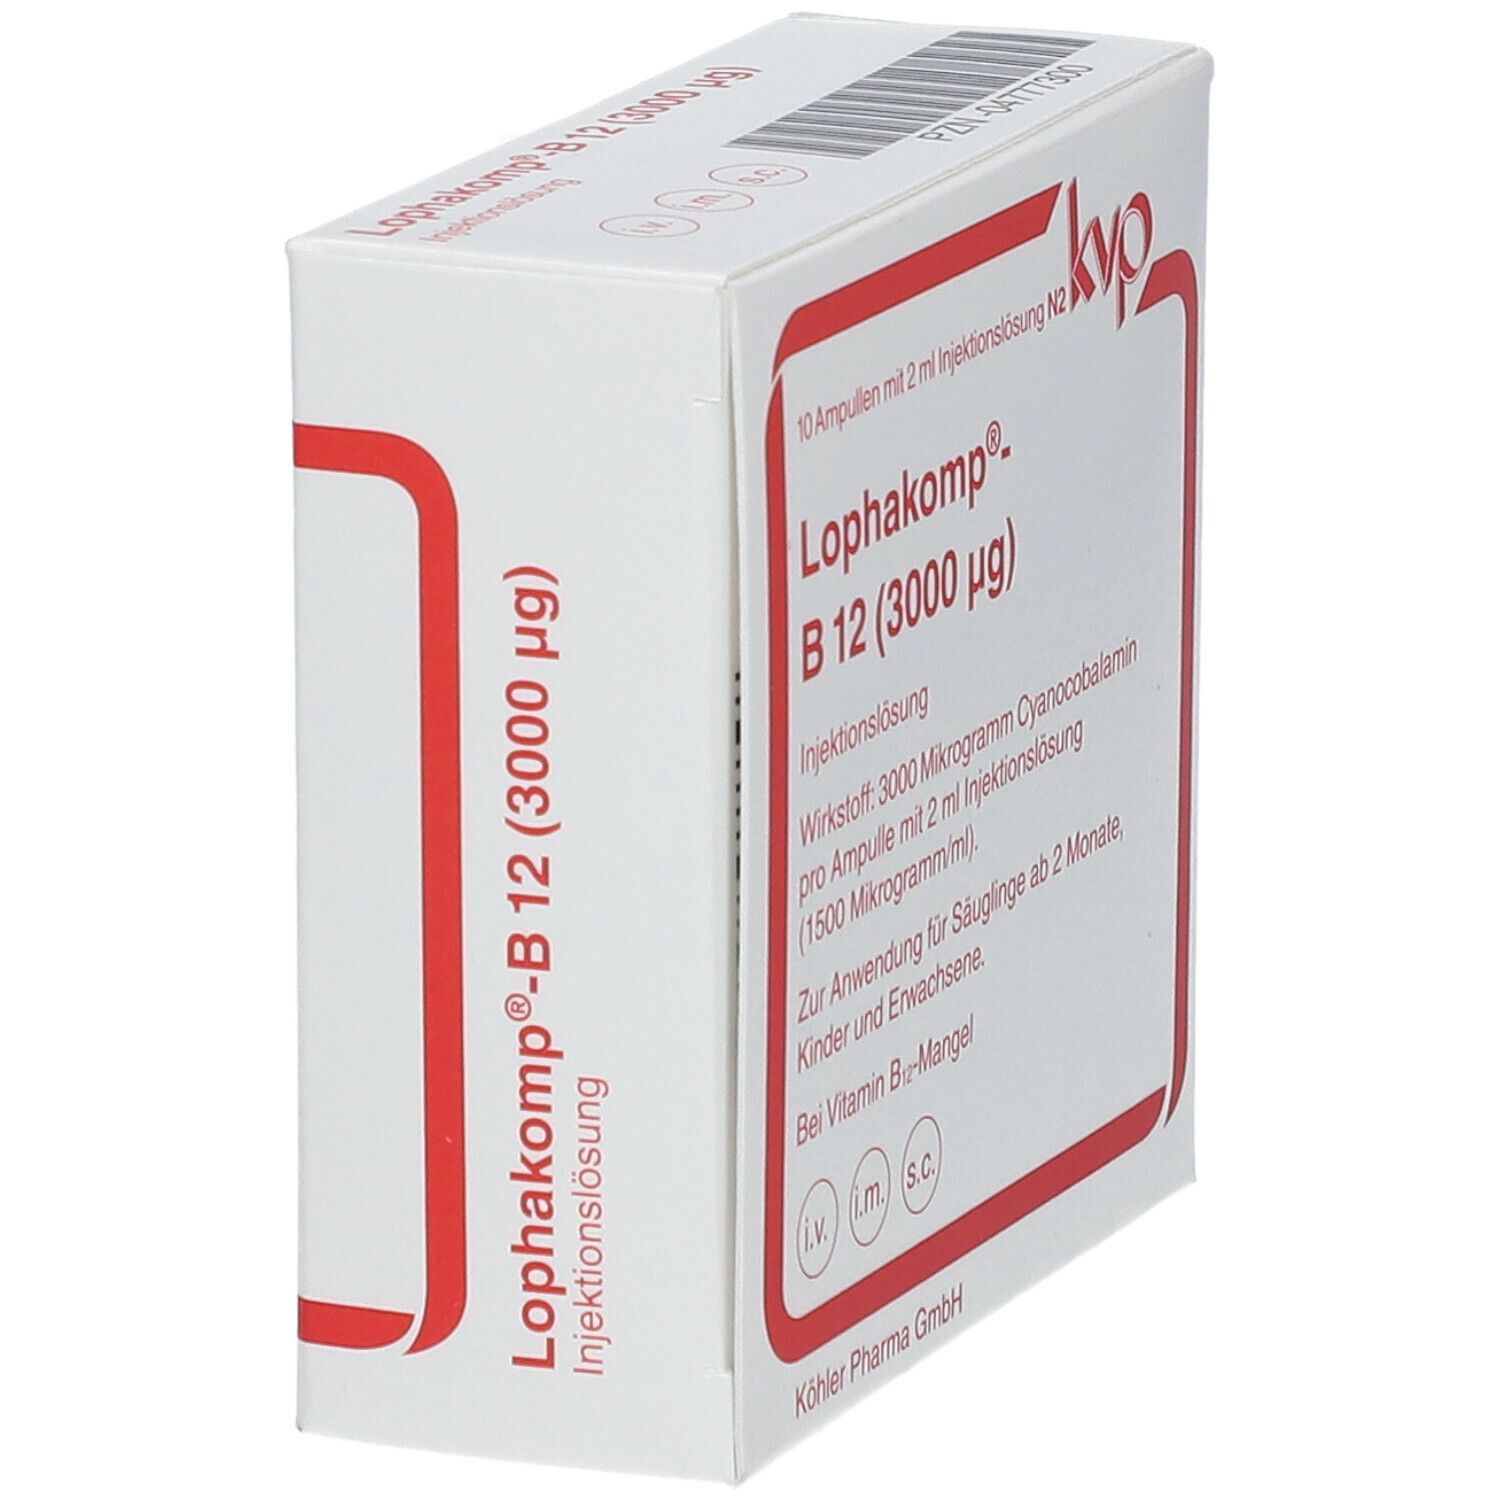 Lophakomp®-B12 3000 µg Injektionslösung